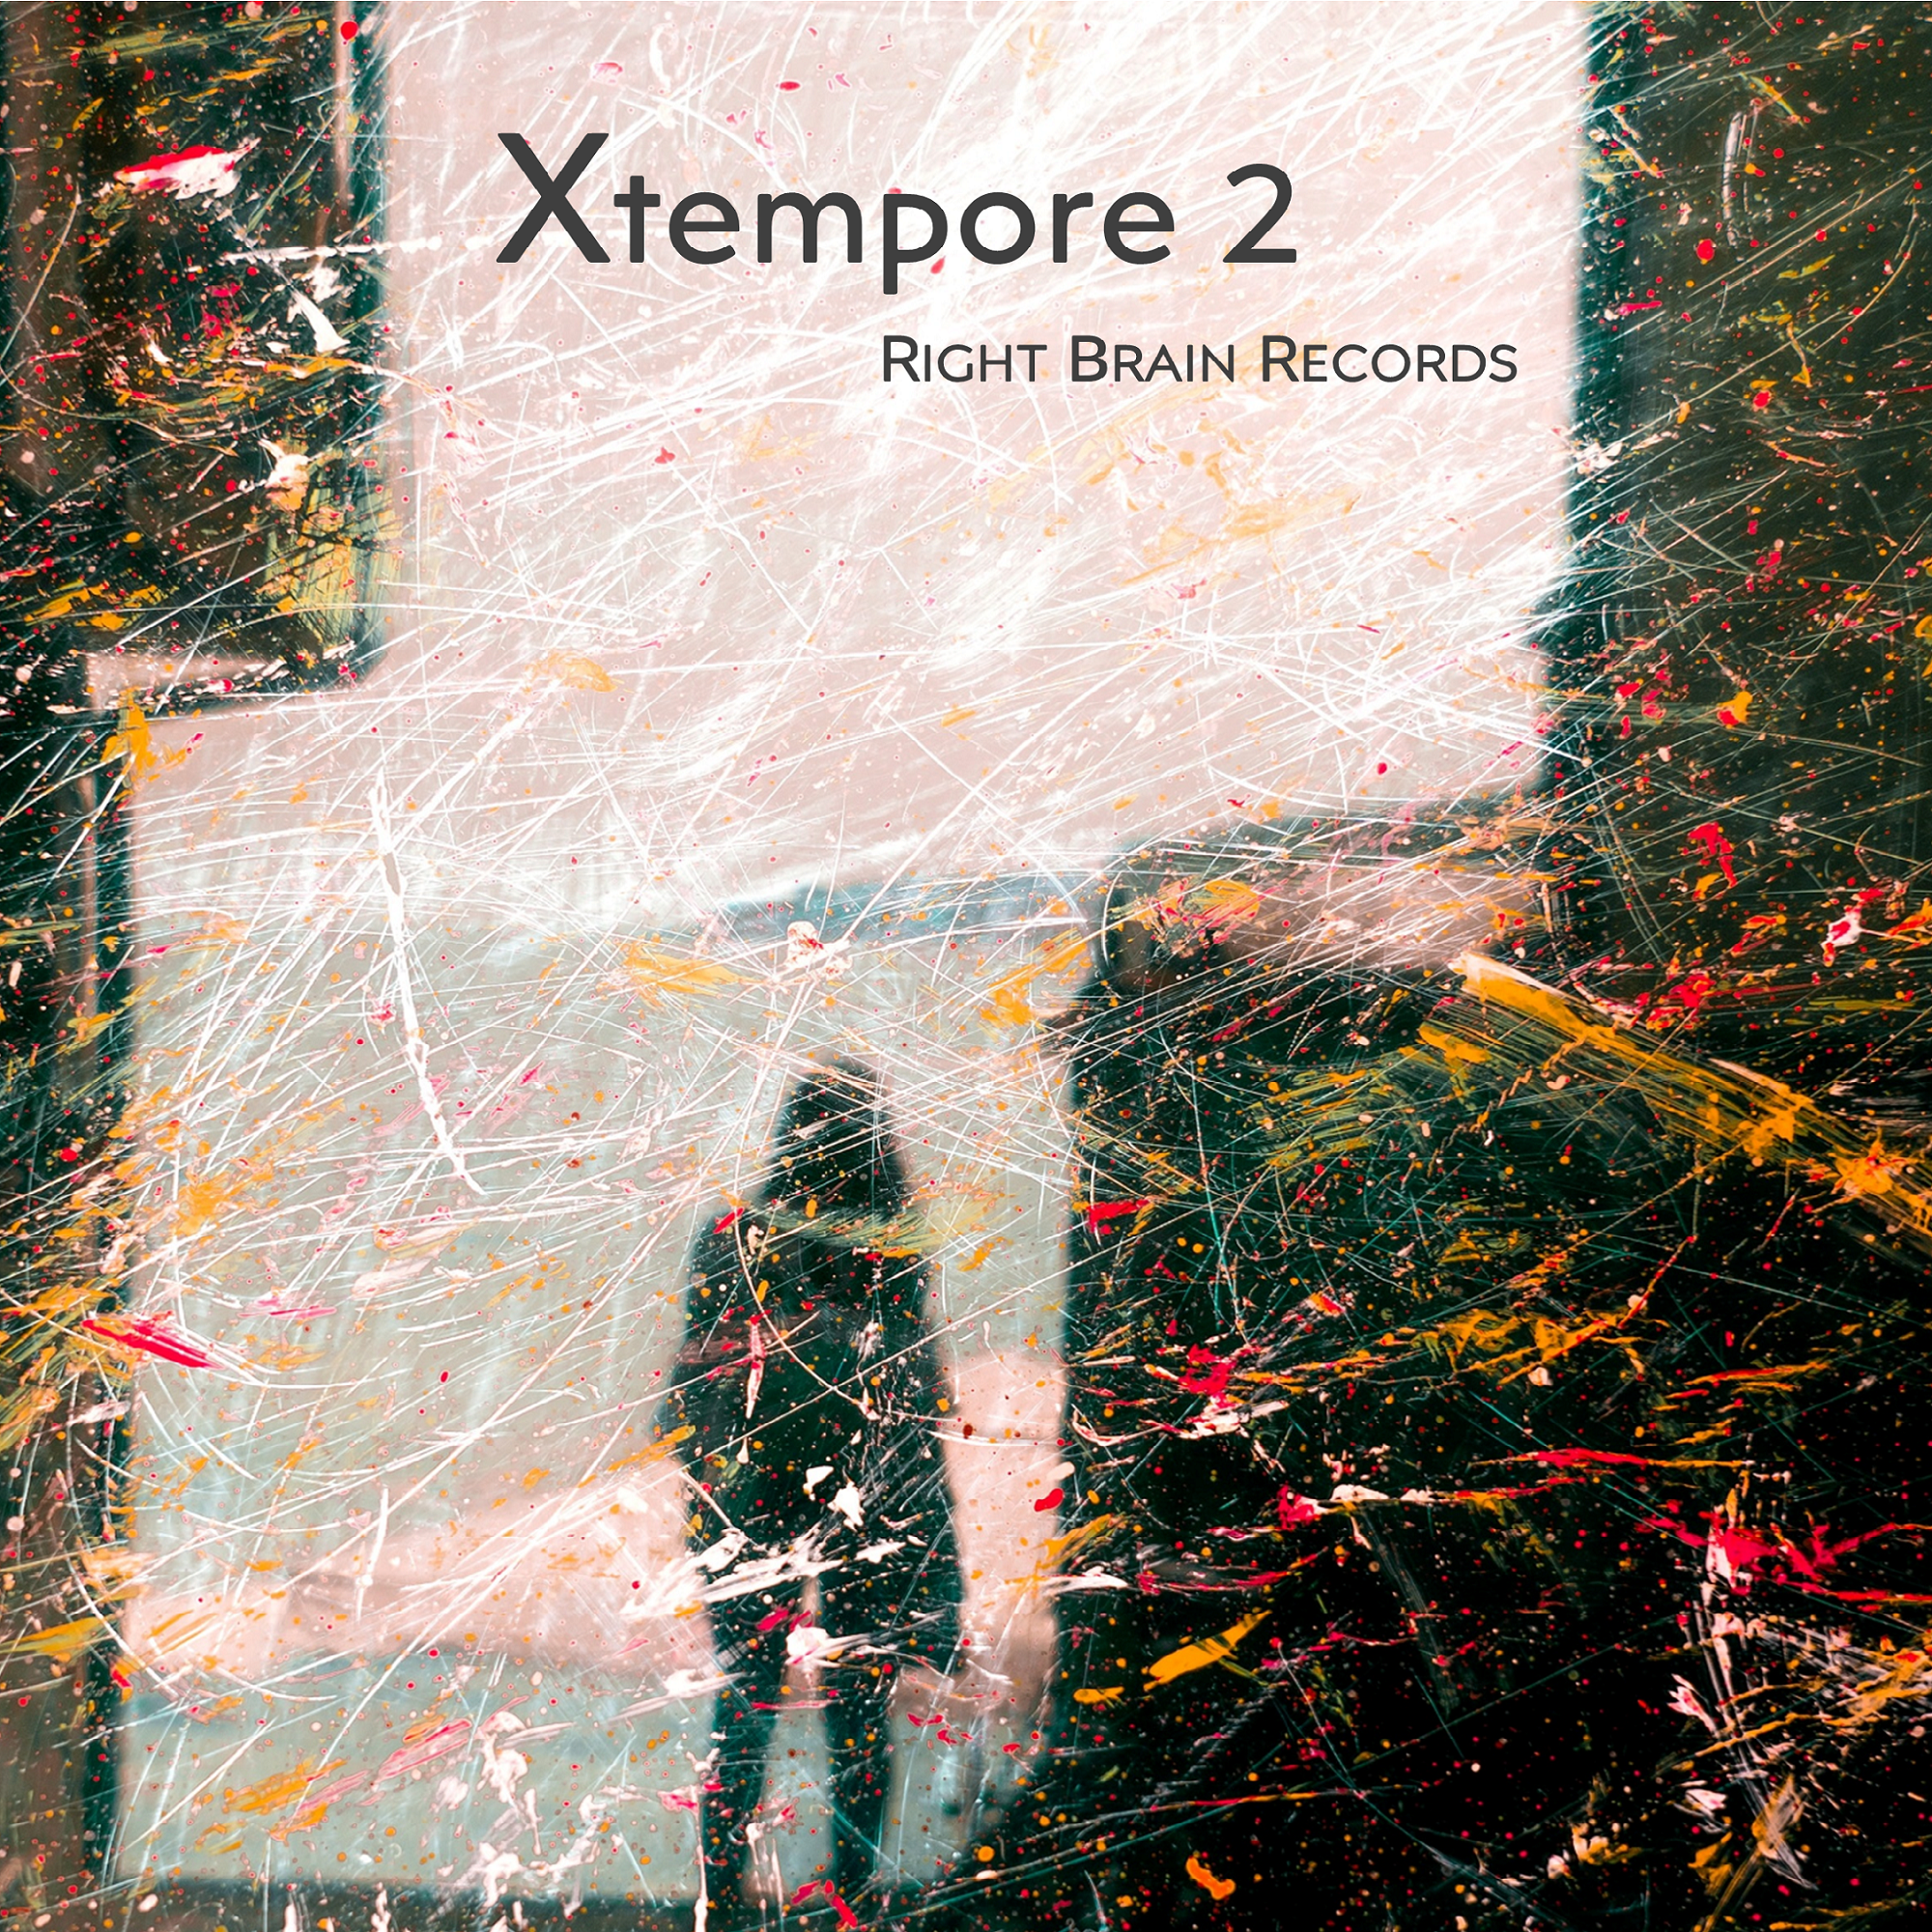 RBR Xtempore 2 cover4a-2000.png